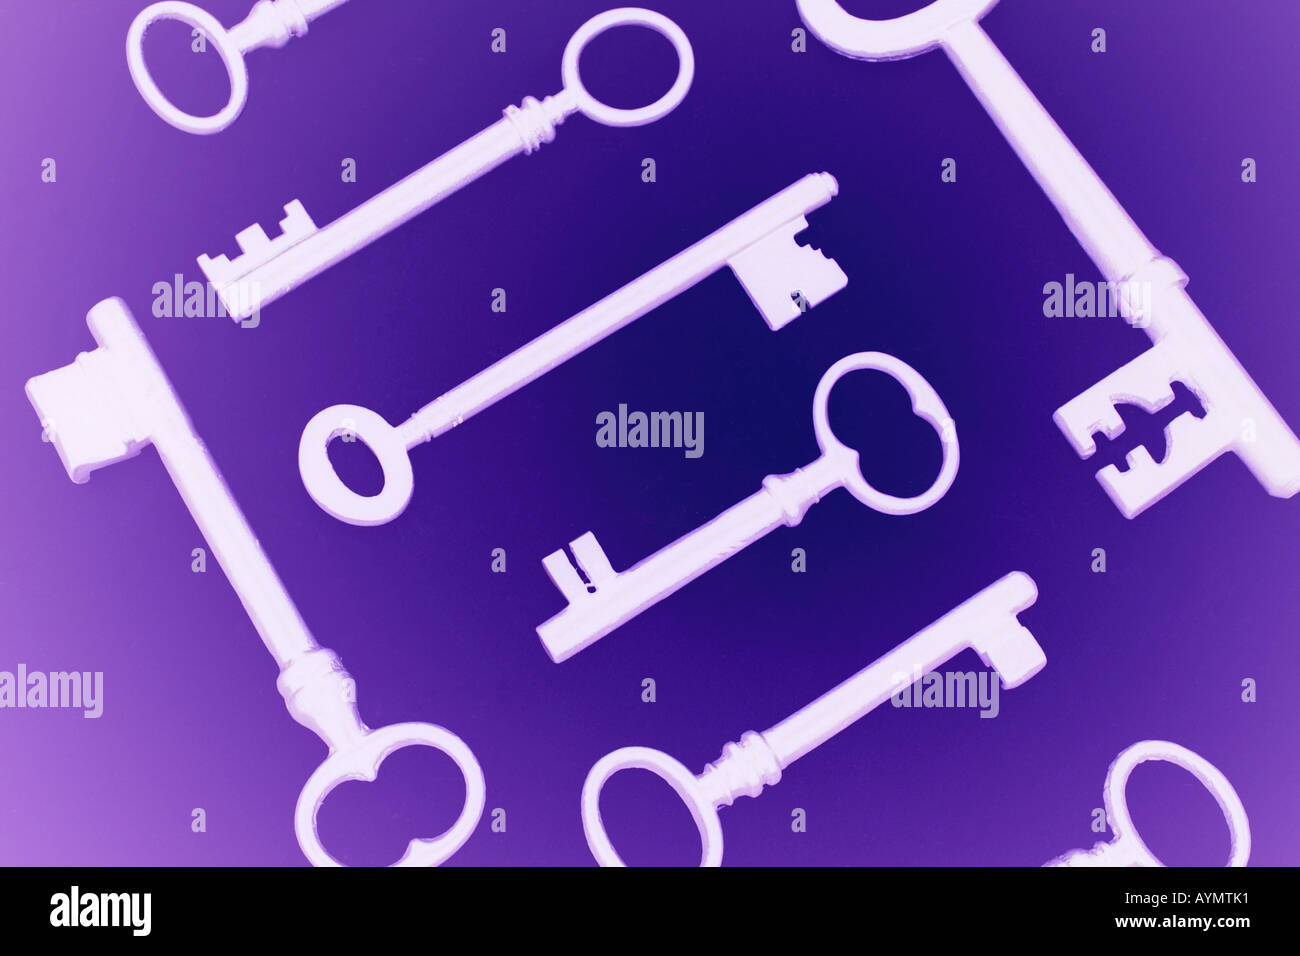 Skeleton Keys Stock Photo